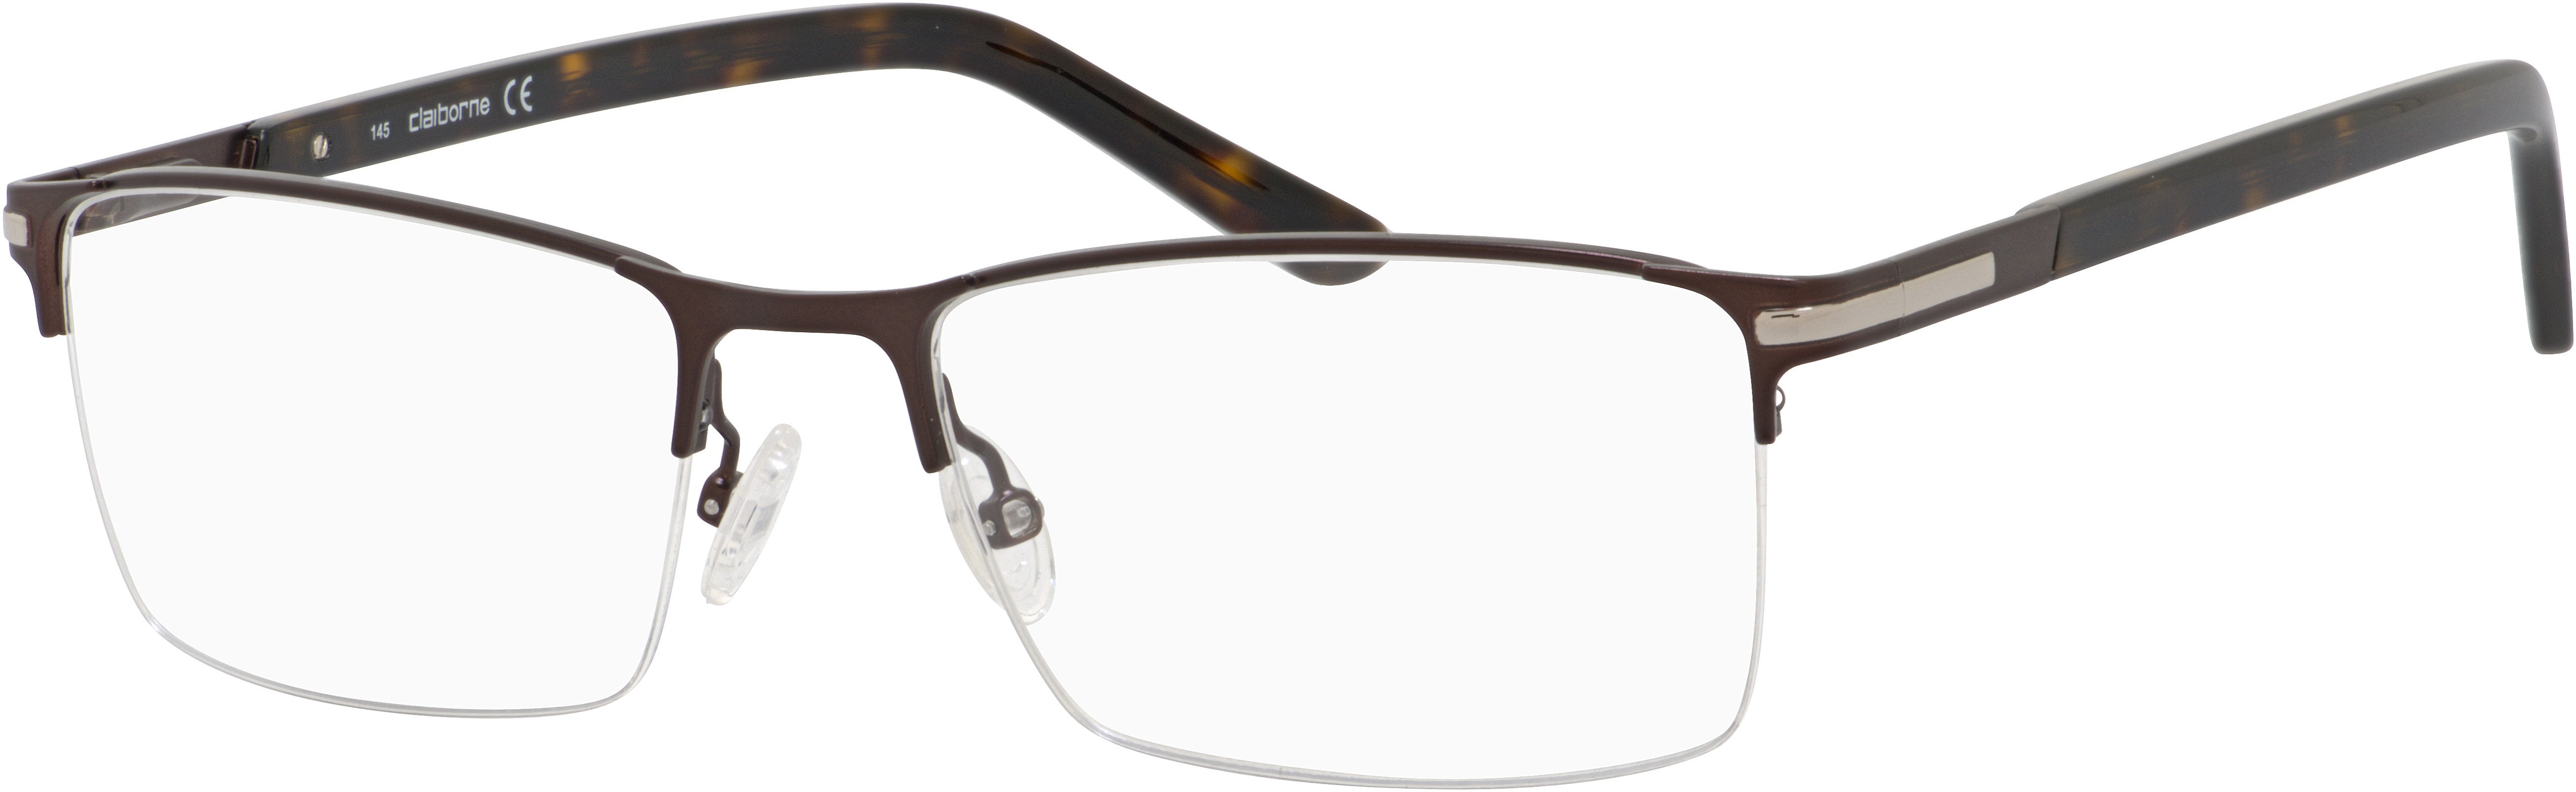  Claiborne 240 Rectangular Eyeglasses 04IN-04IN  Matte Brown (00 Demo Lens)